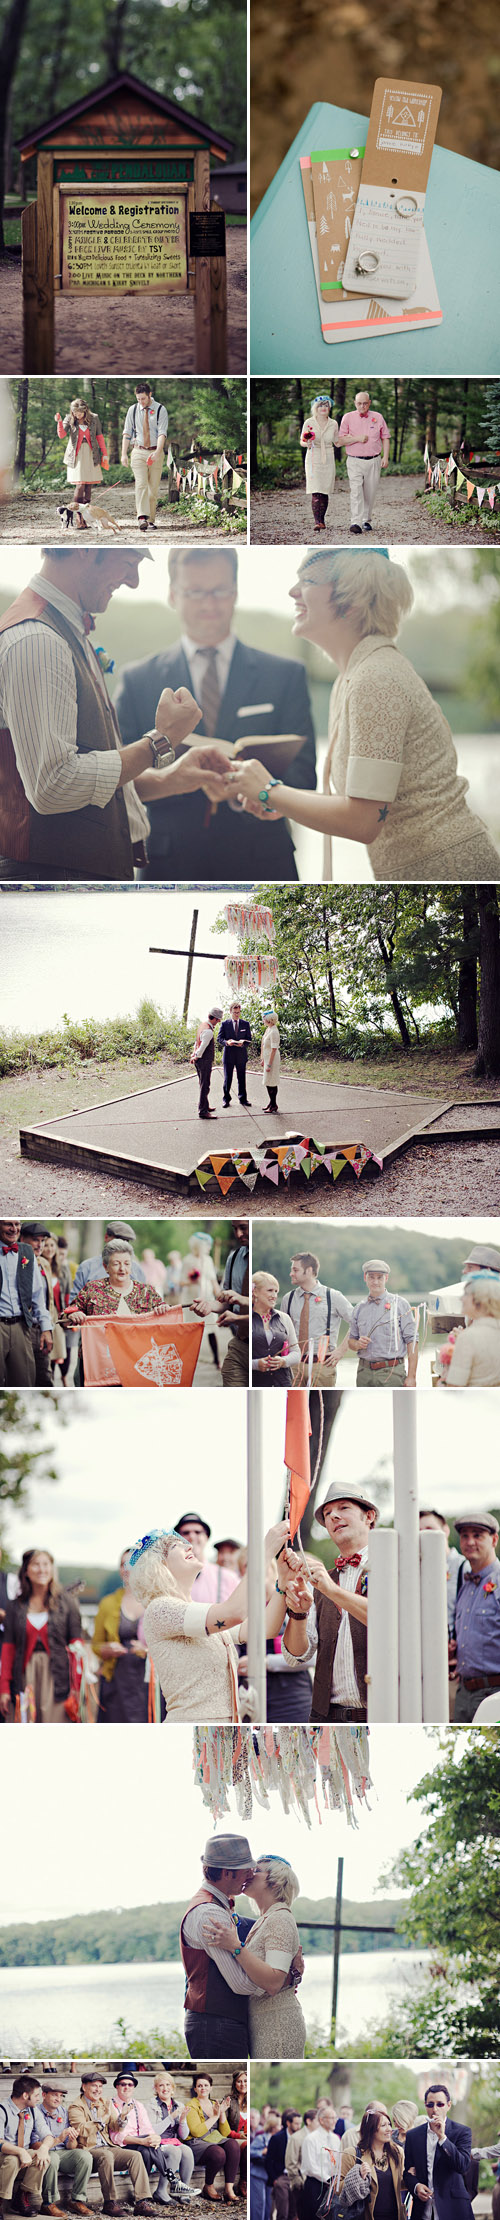 vintage summer camp inspired wedding in Michigan, creative alternative wedding photos by Kat Braman